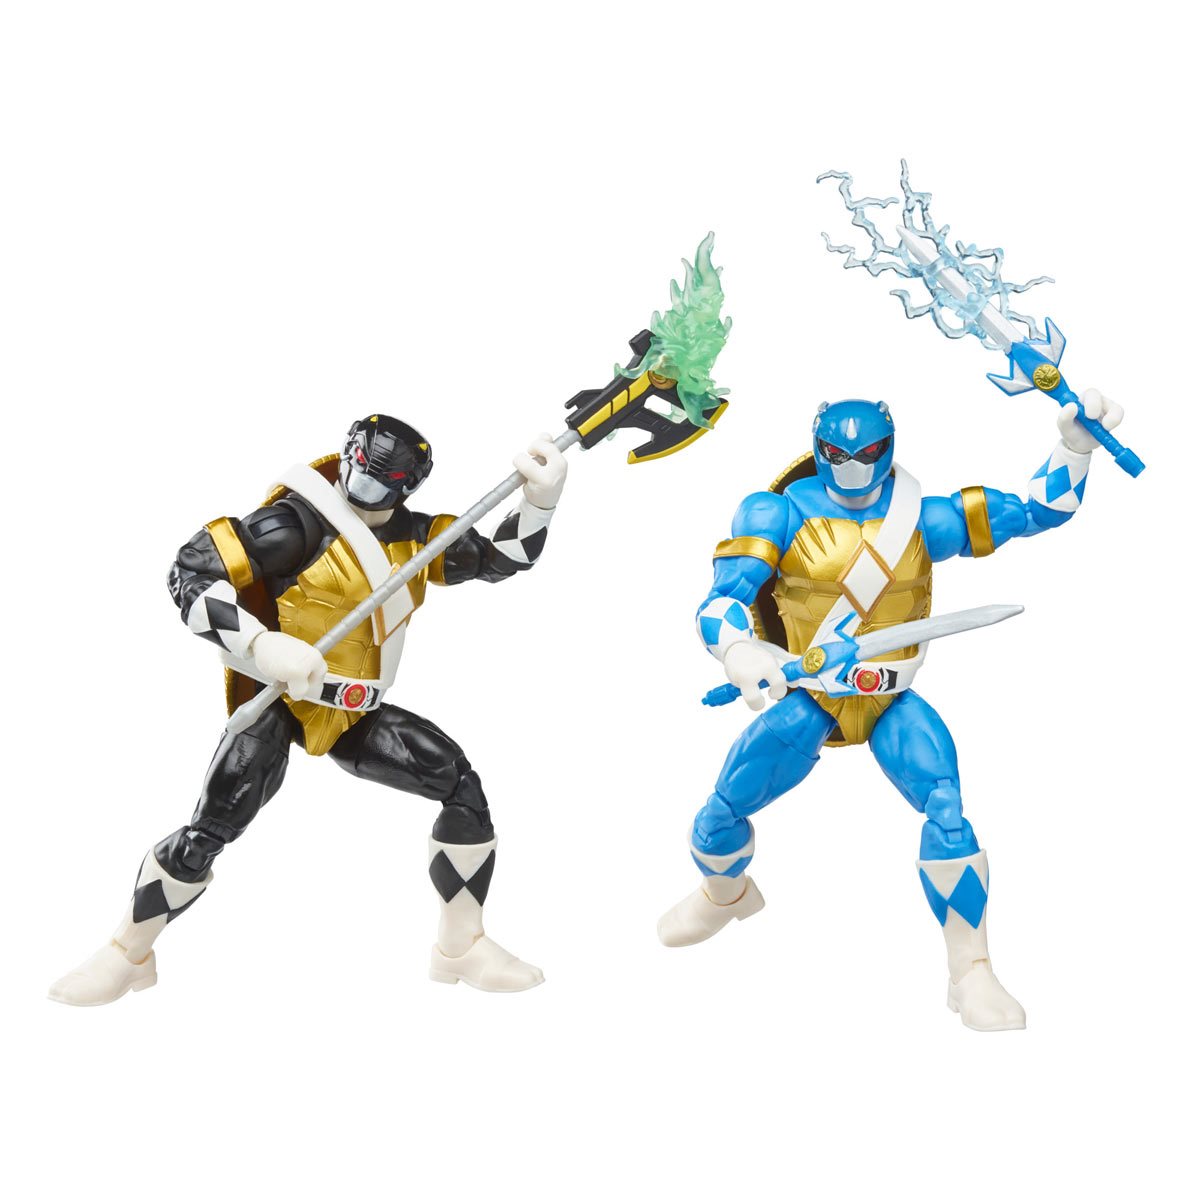 Power Rangers X Teenage Mutant Ninja Turtles: Lightning Collection Donatello Black and Leonardo Blue Action Figures